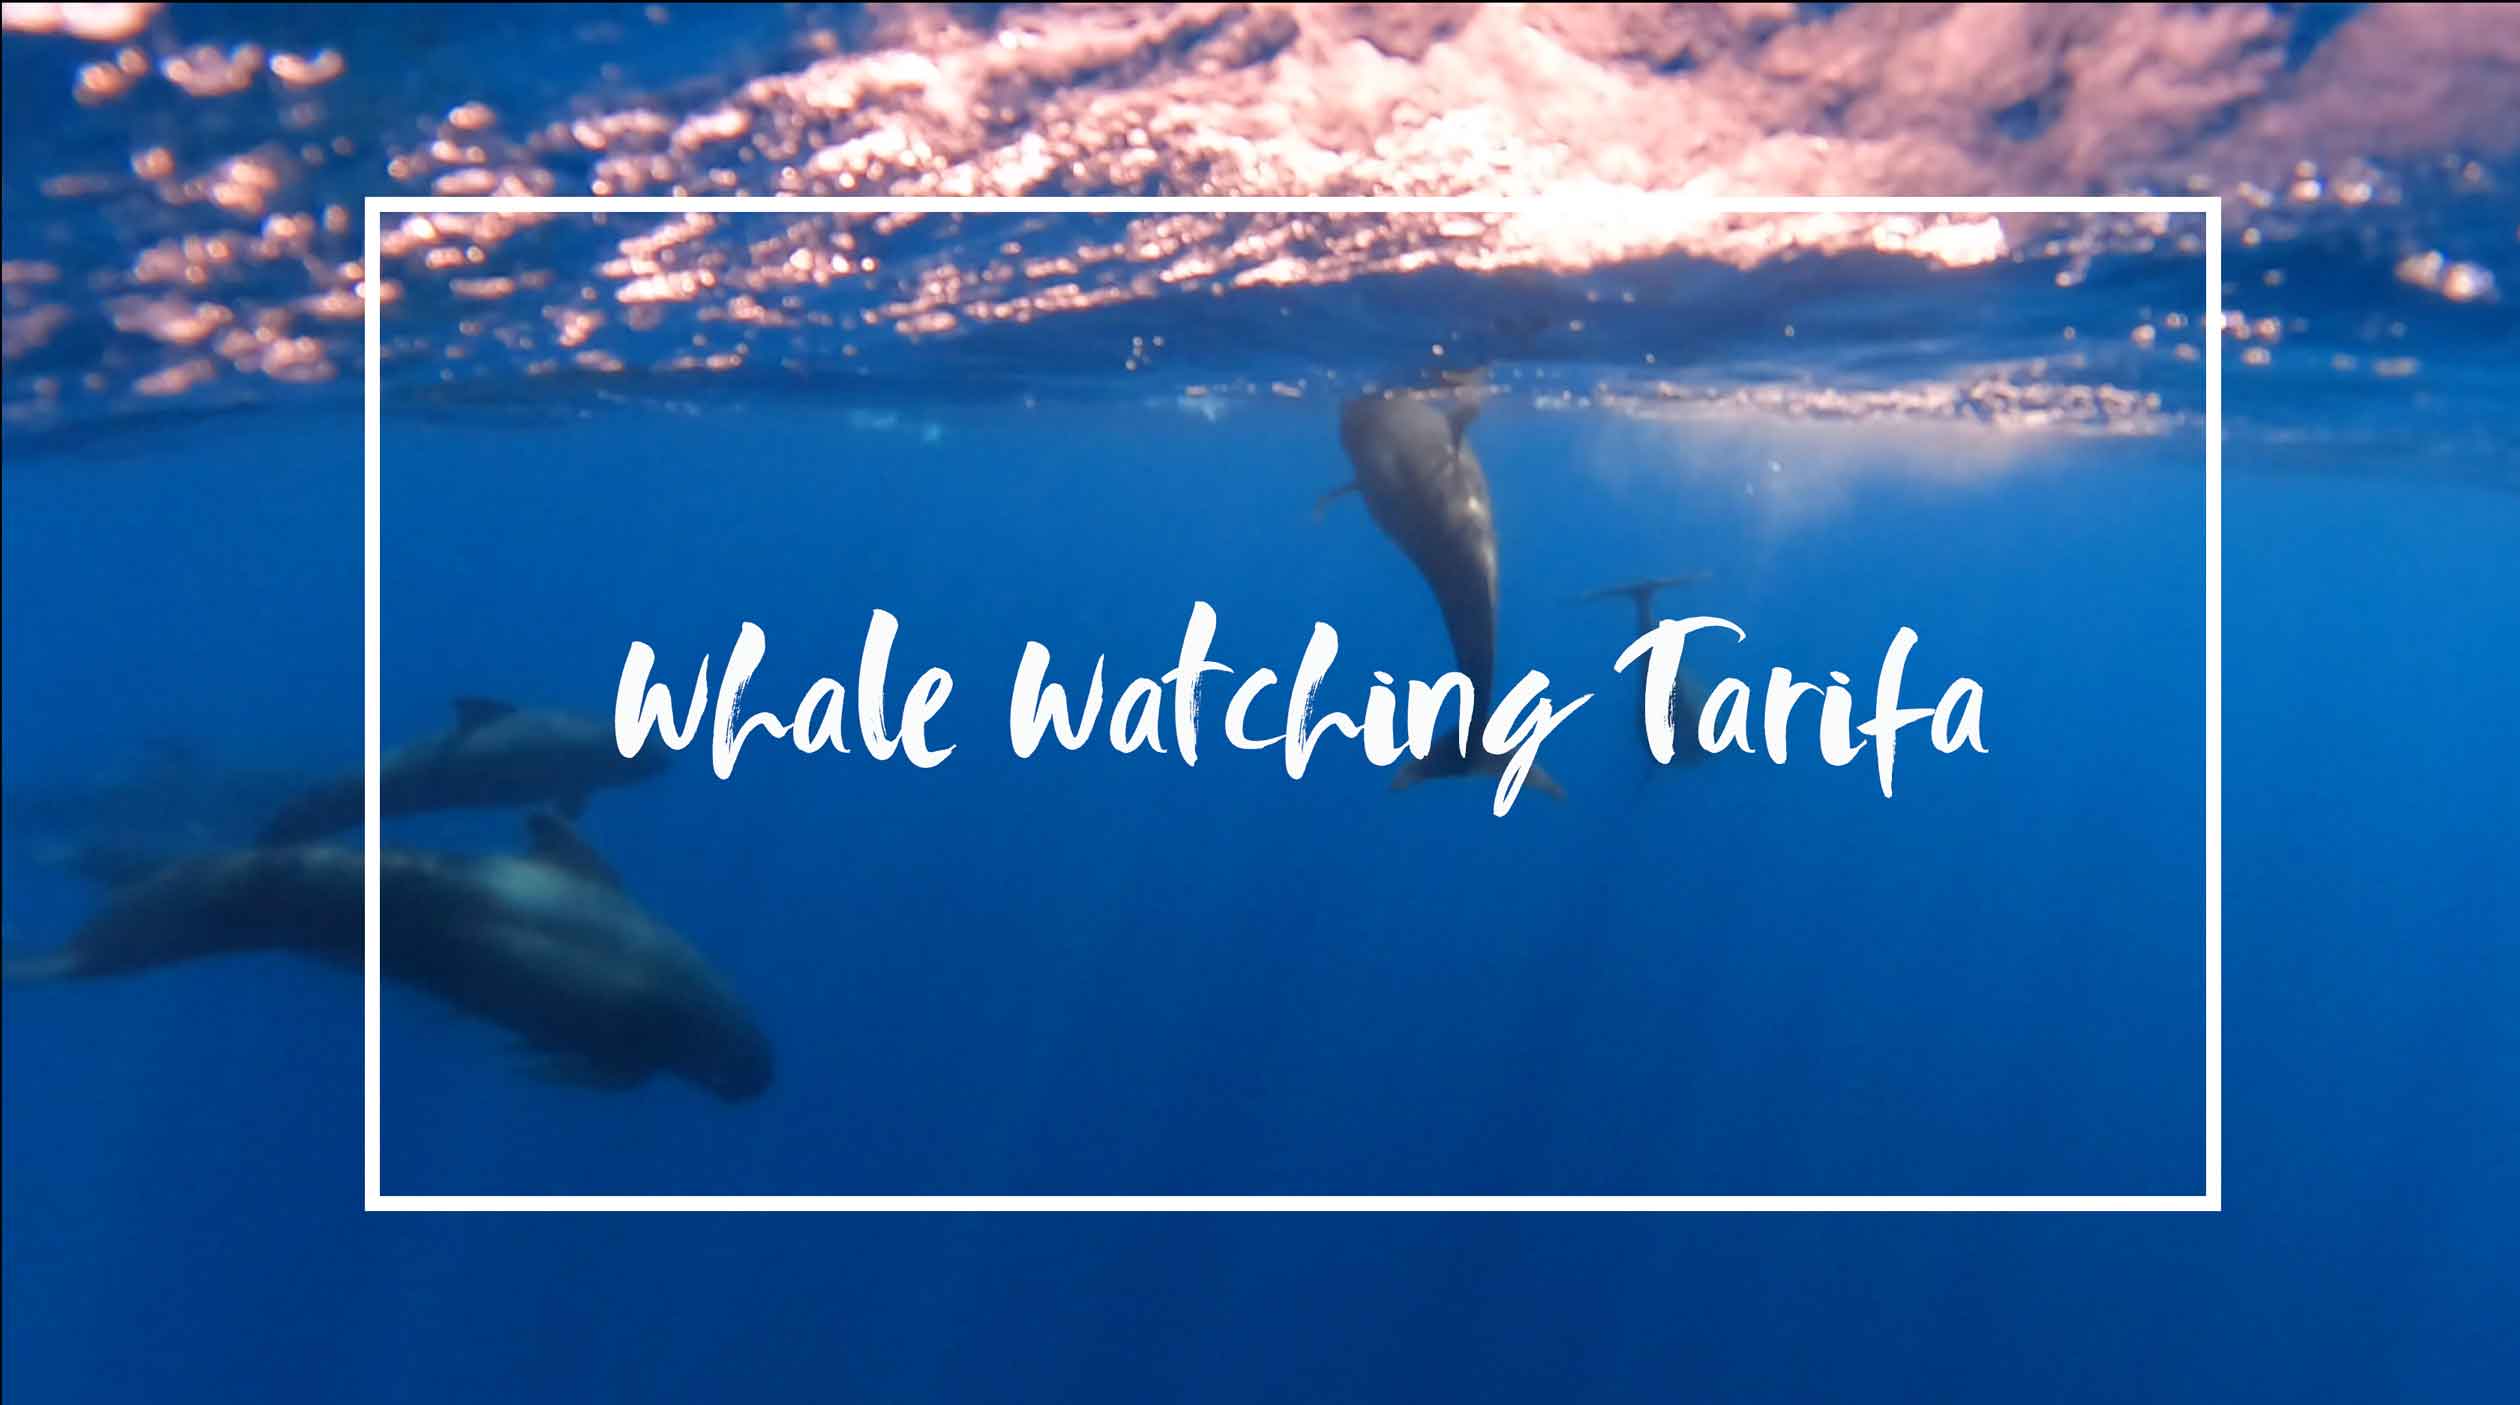 Whale watching in Tarifa